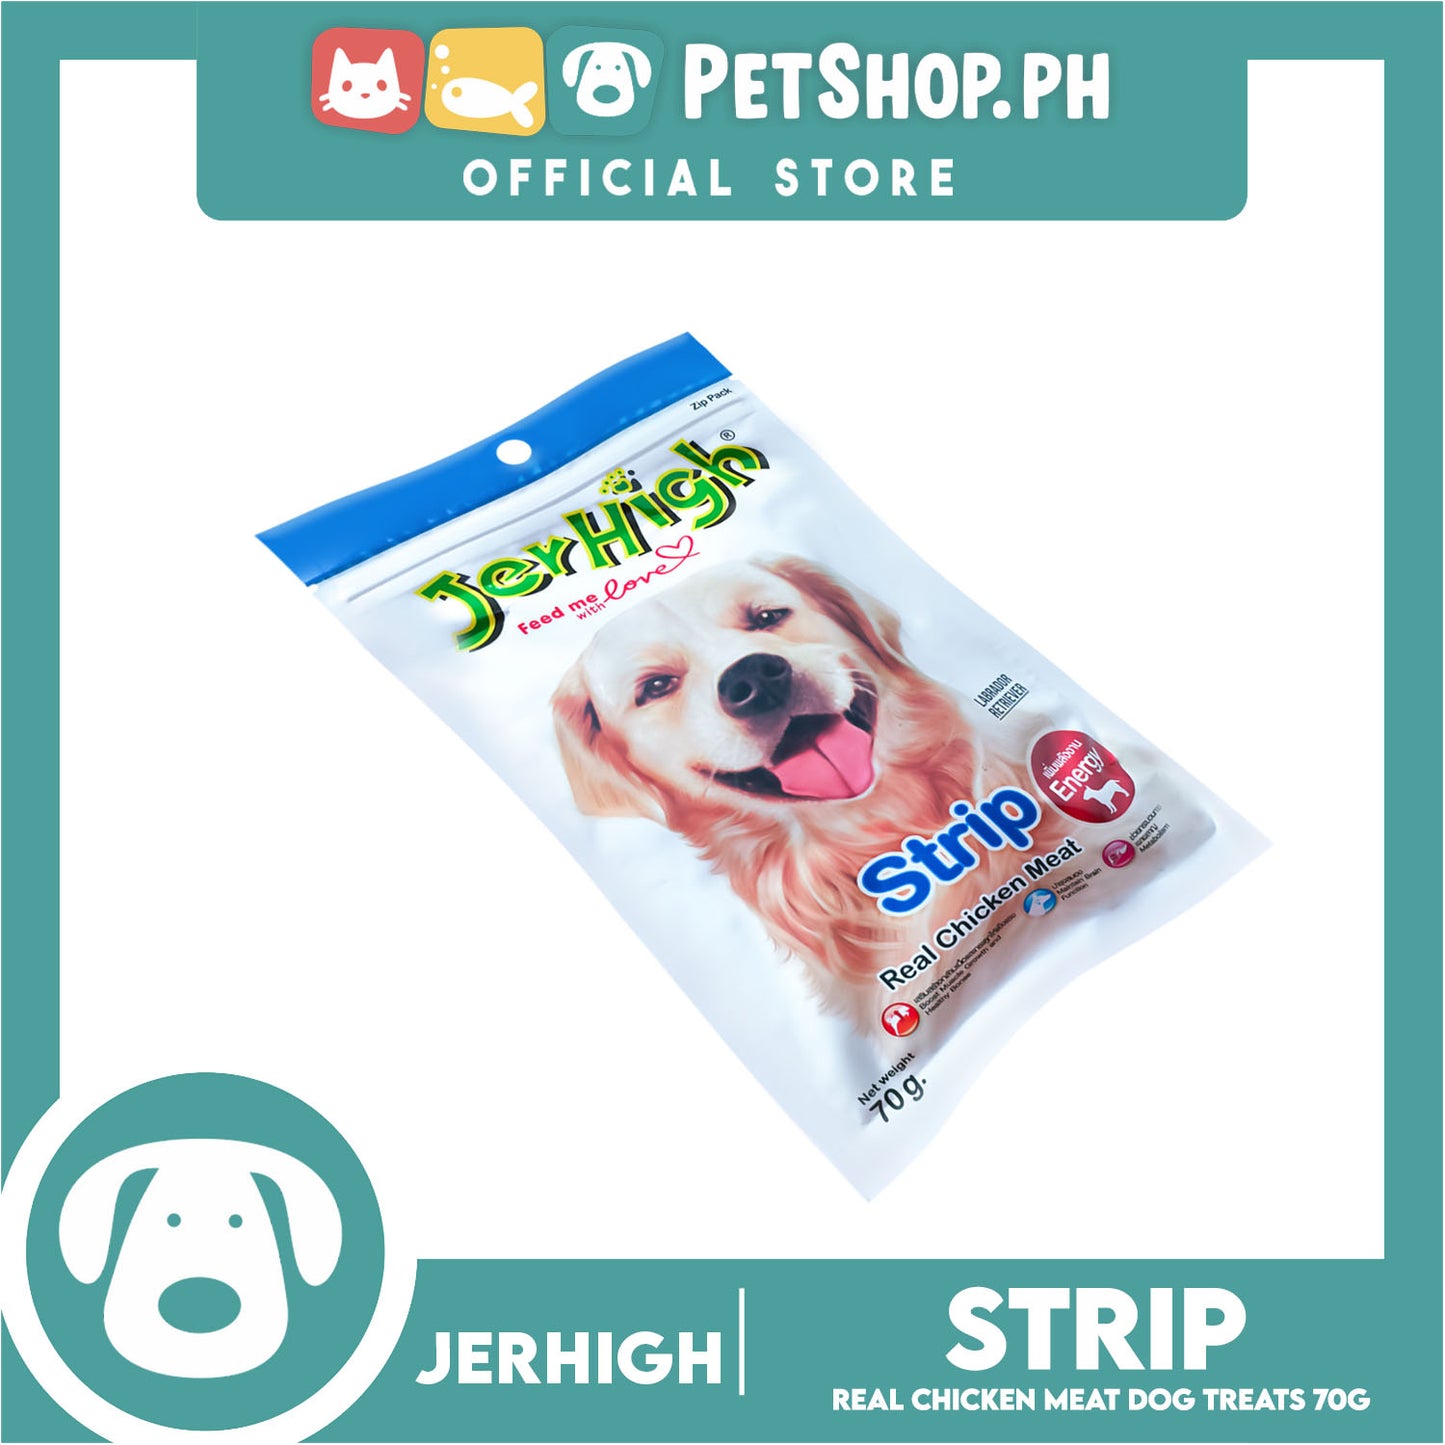 Jerhigh Real Chicken Meat Stick 70g (Strip) Dog Treats